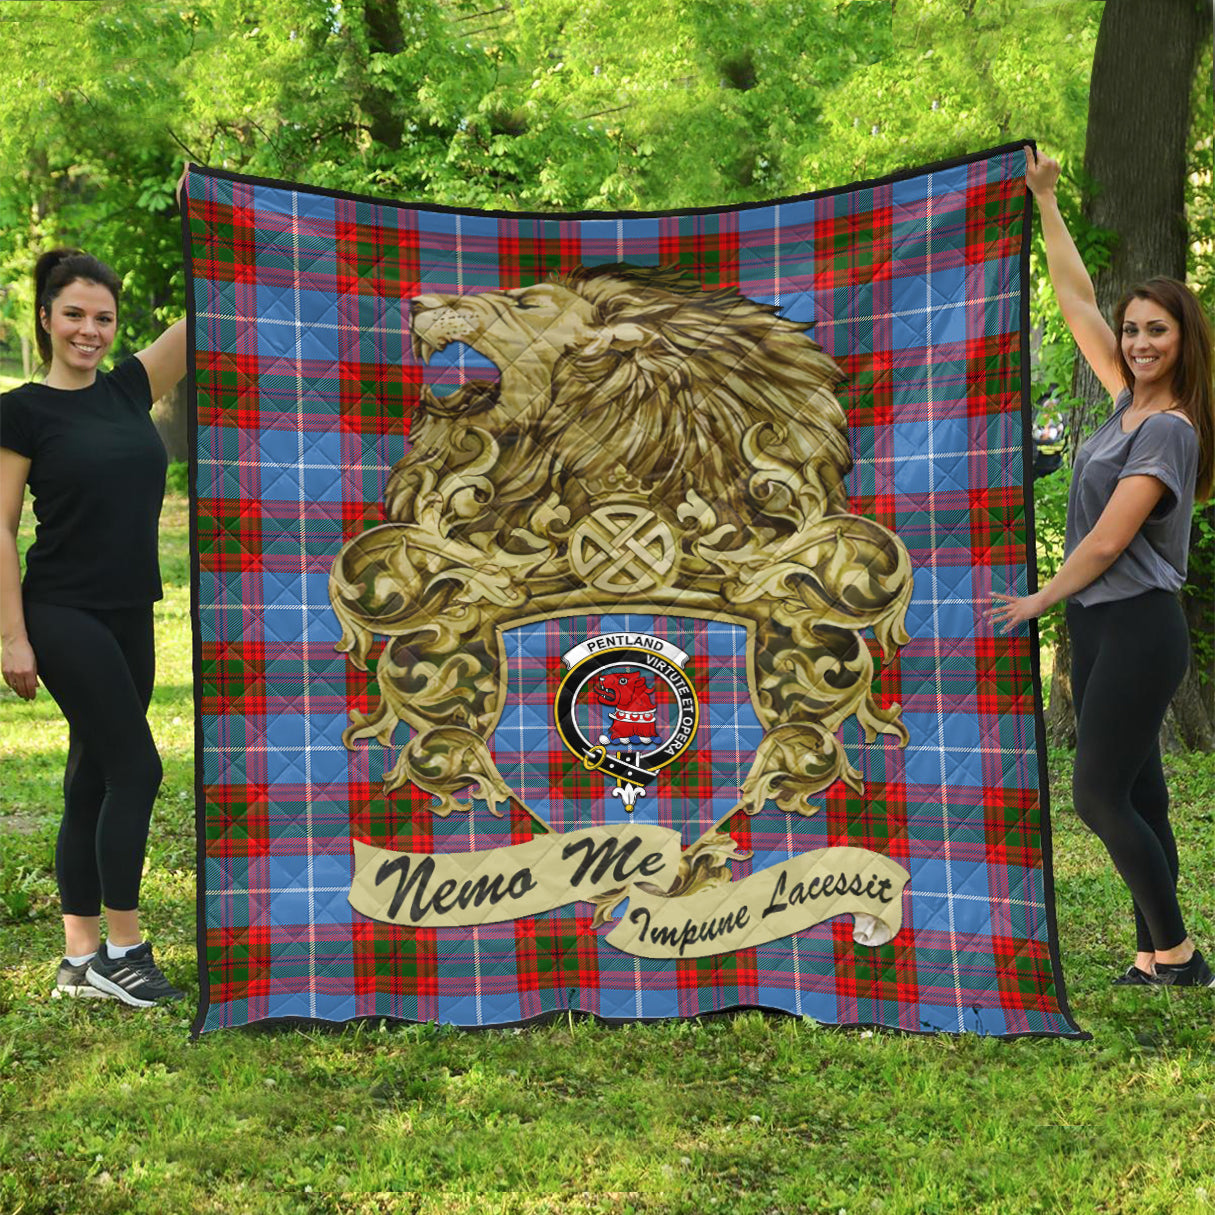 pentland-tartan-quilt-with-motto-nemo-me-impune-lacessit-with-vintage-lion-family-crest-tartan-quilt-pattern-scottish-tartan-plaid-quilt-vintage-style